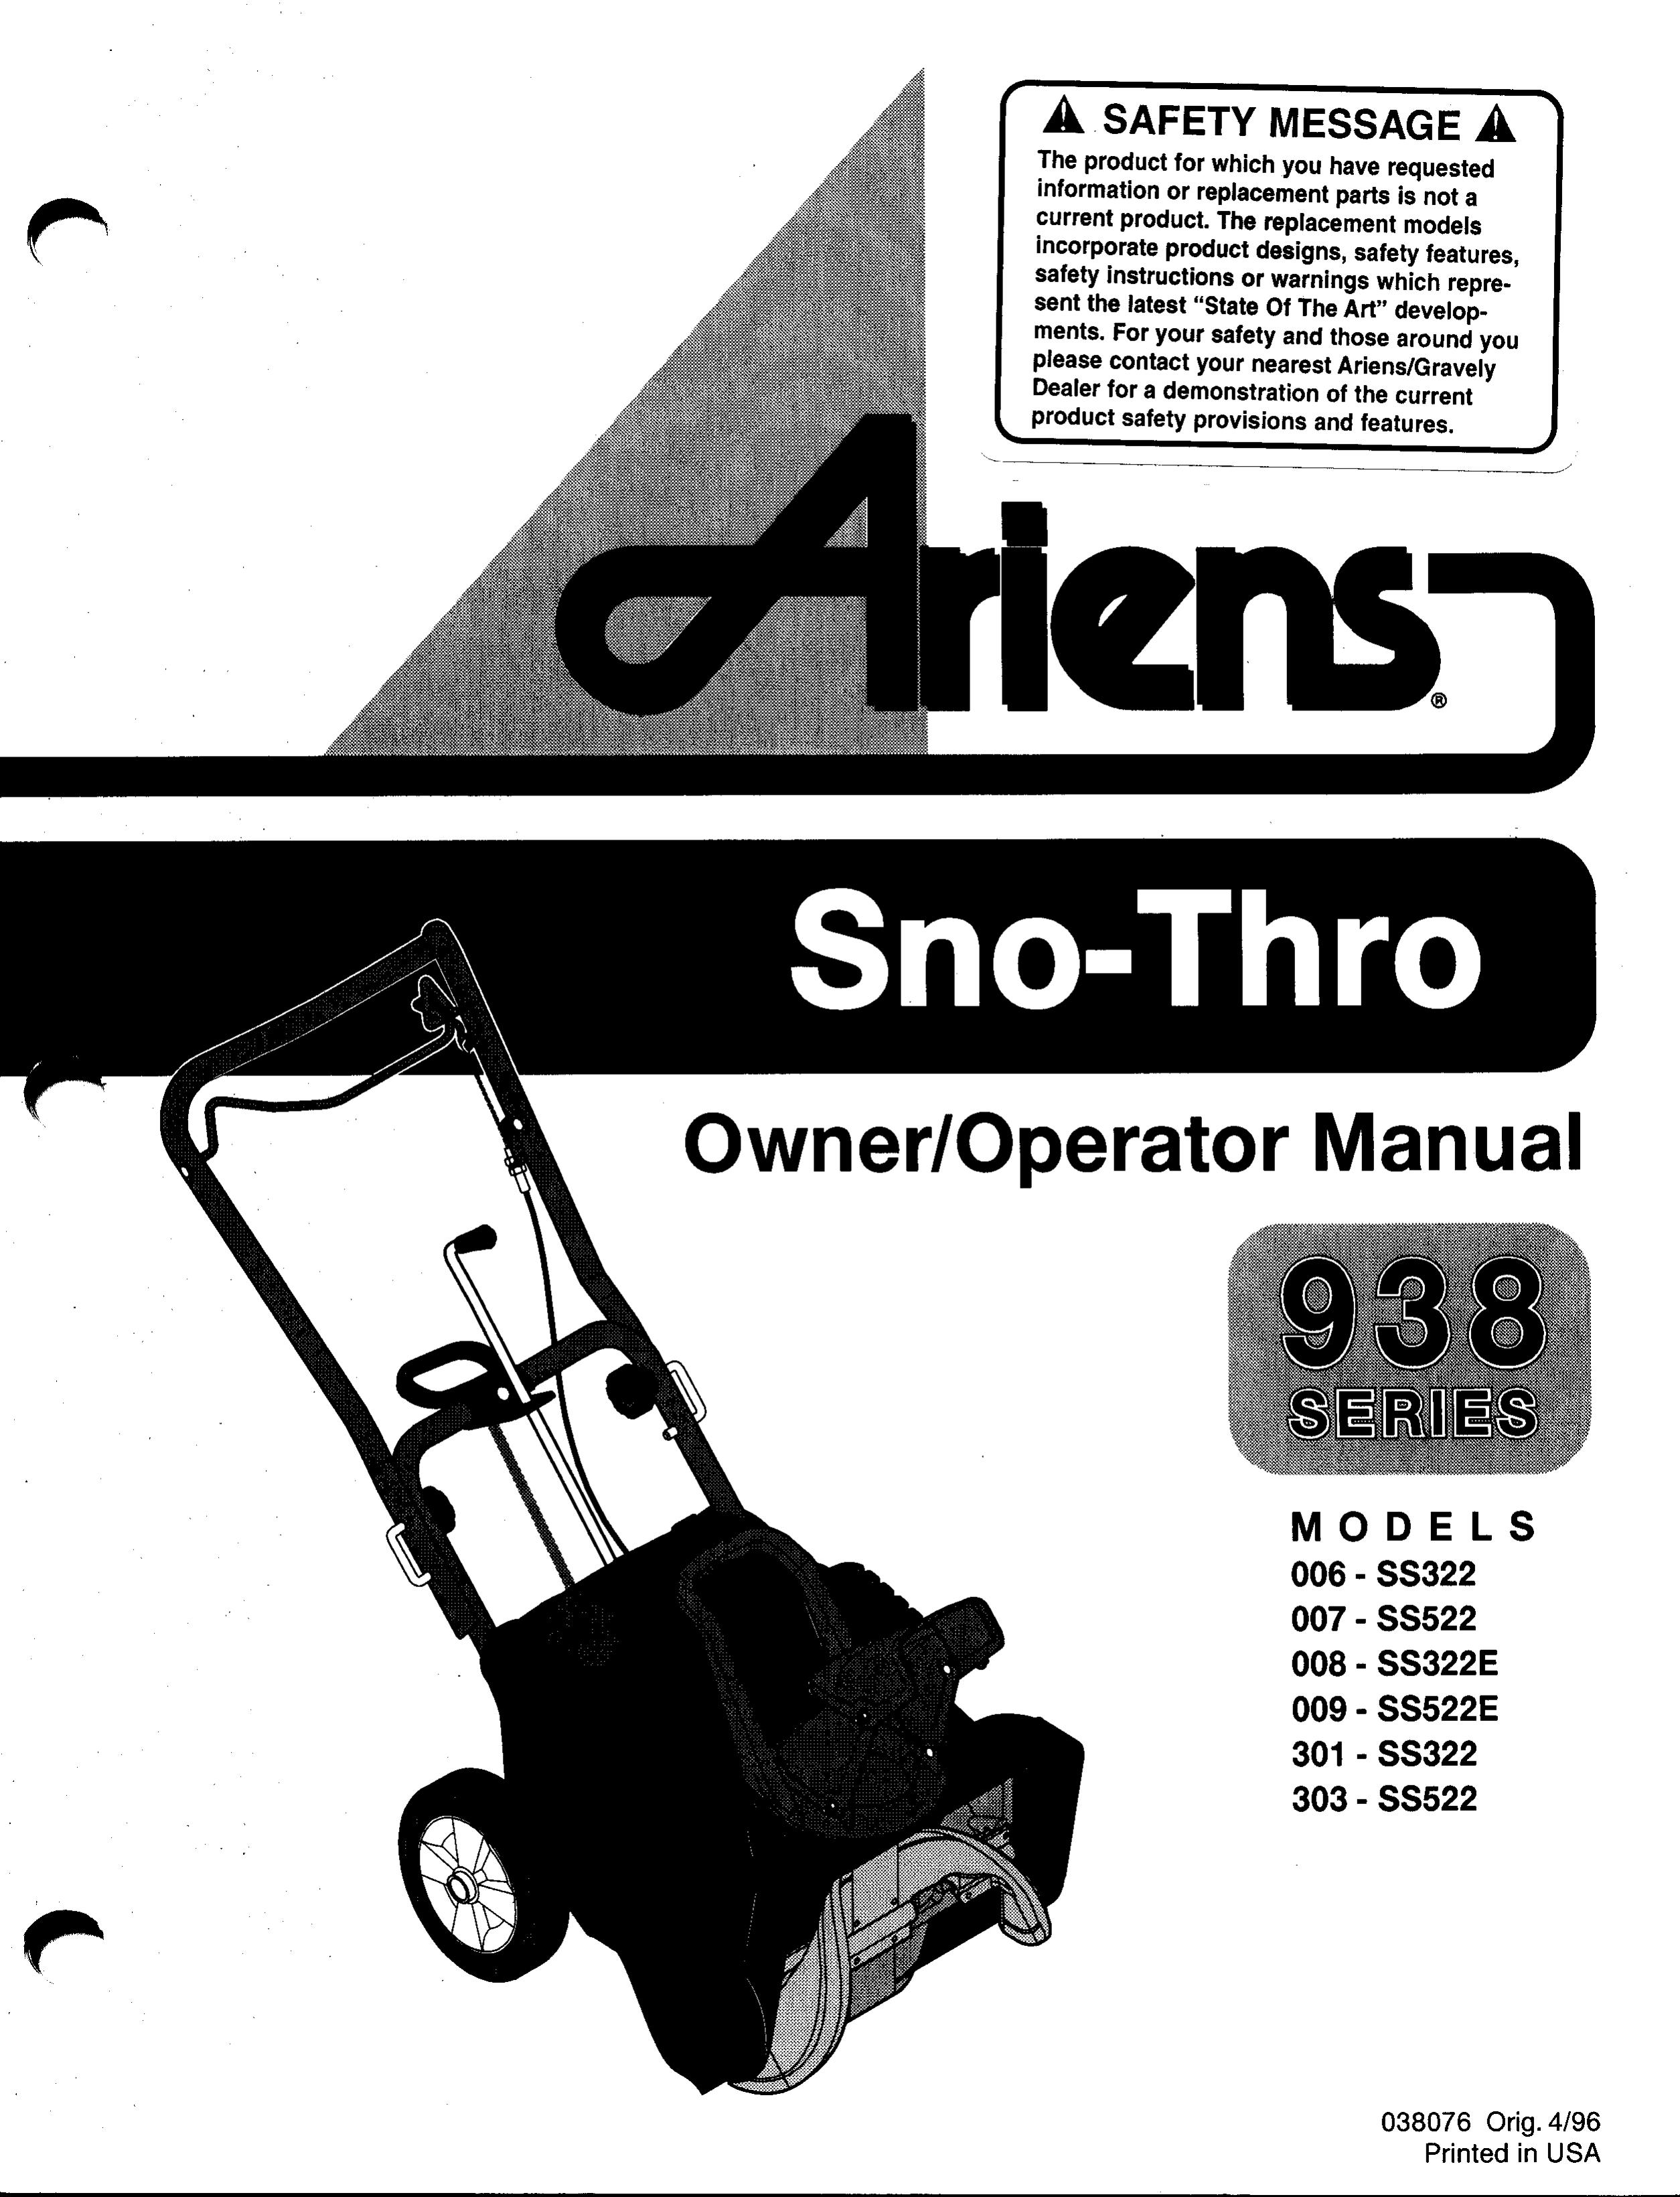 Ariens 006-SS322 Snow Blower User Manual